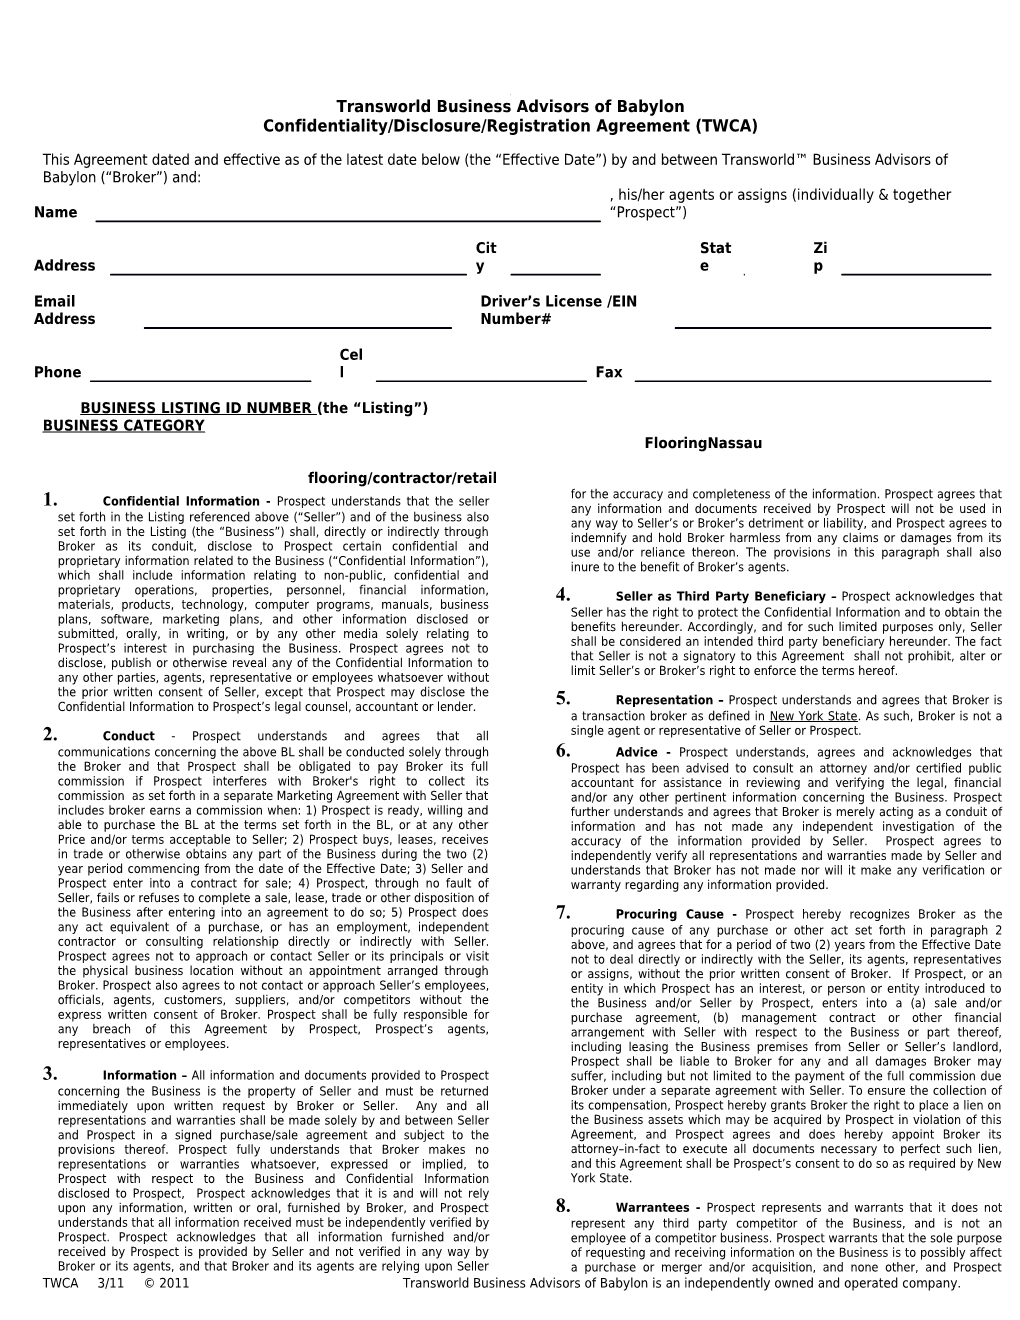 Transworld Confidentiality/Non Circumvent/Disclosure/Buyer Registration Agreement (TWCA)